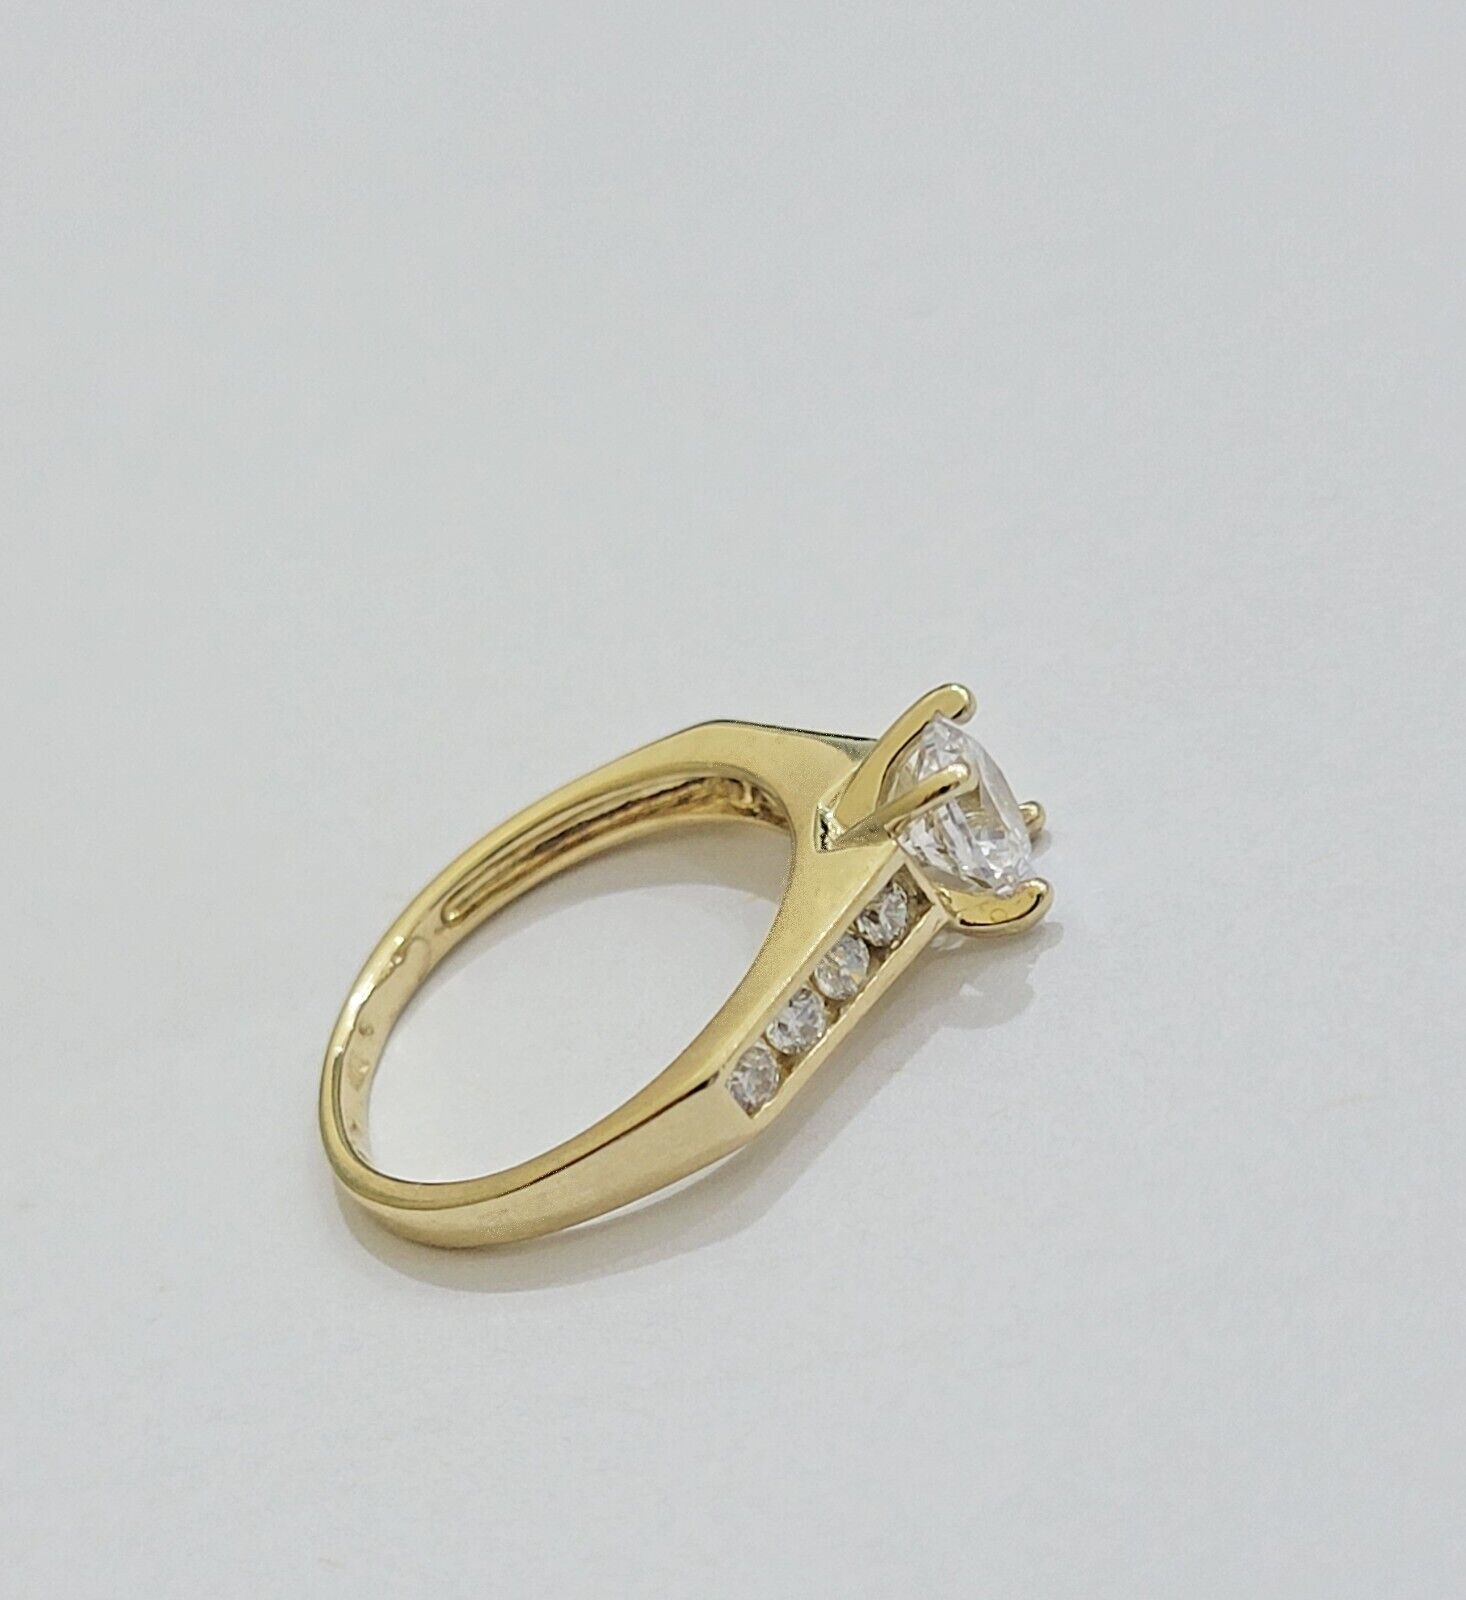 10k Yellow Gold Ring Ladies Engagement Wedding Band Size 7 Real 10kt Women